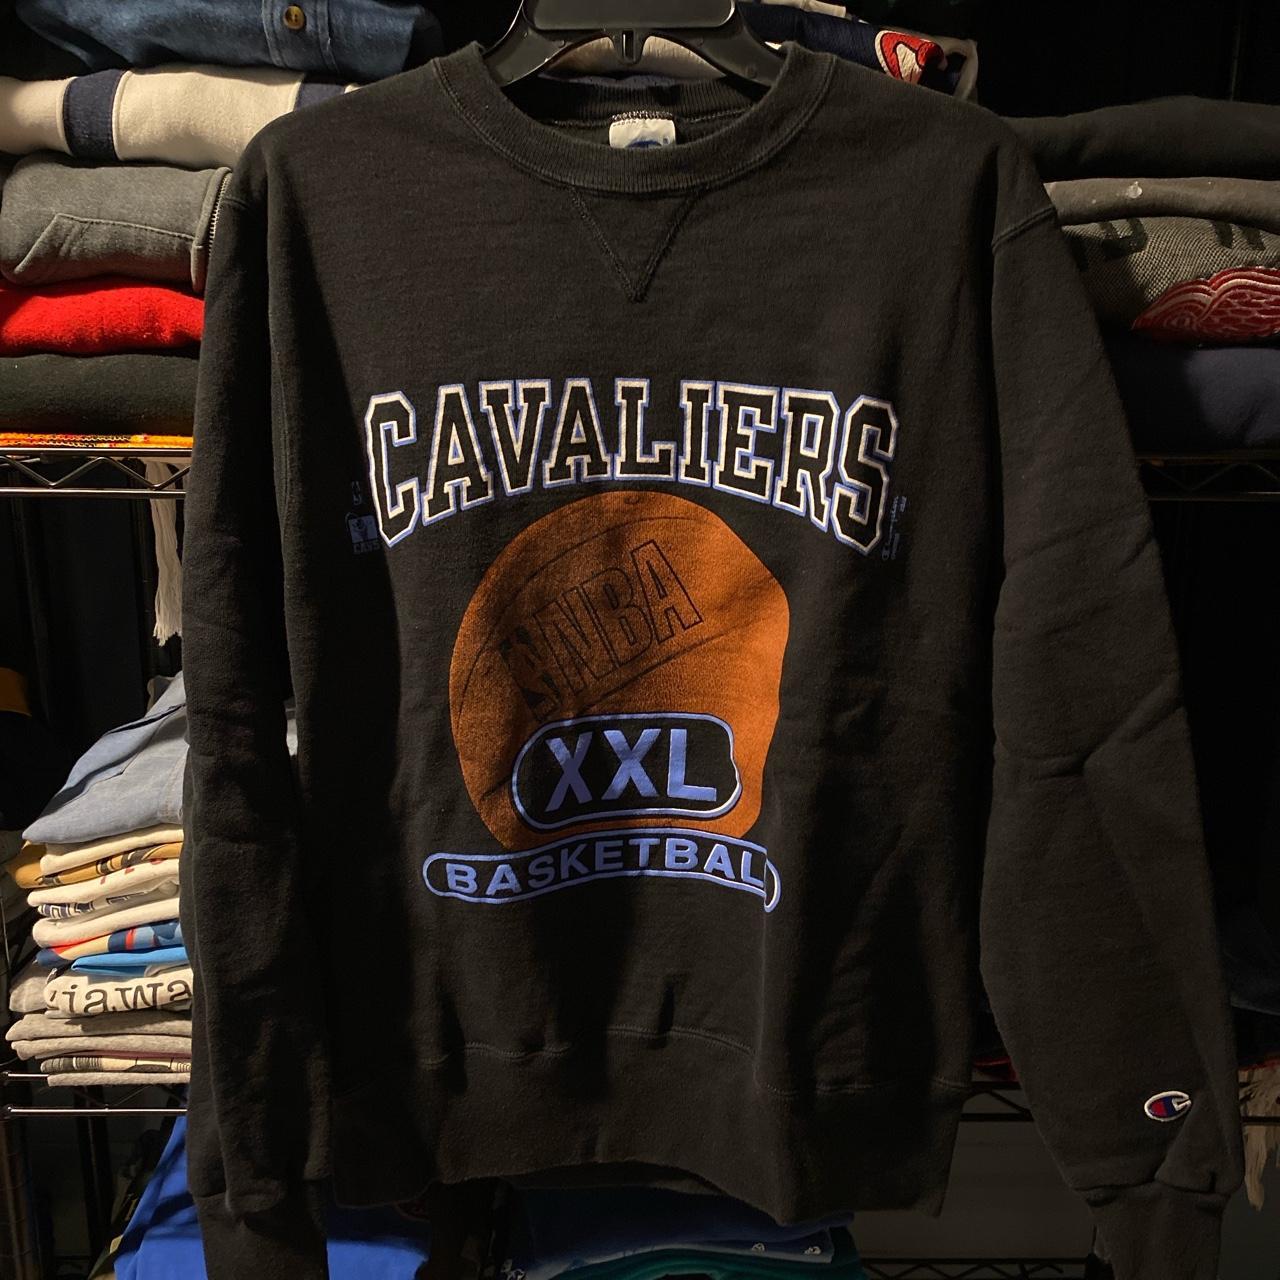 Vintage Cleveland Cavs Champion T-Shirt